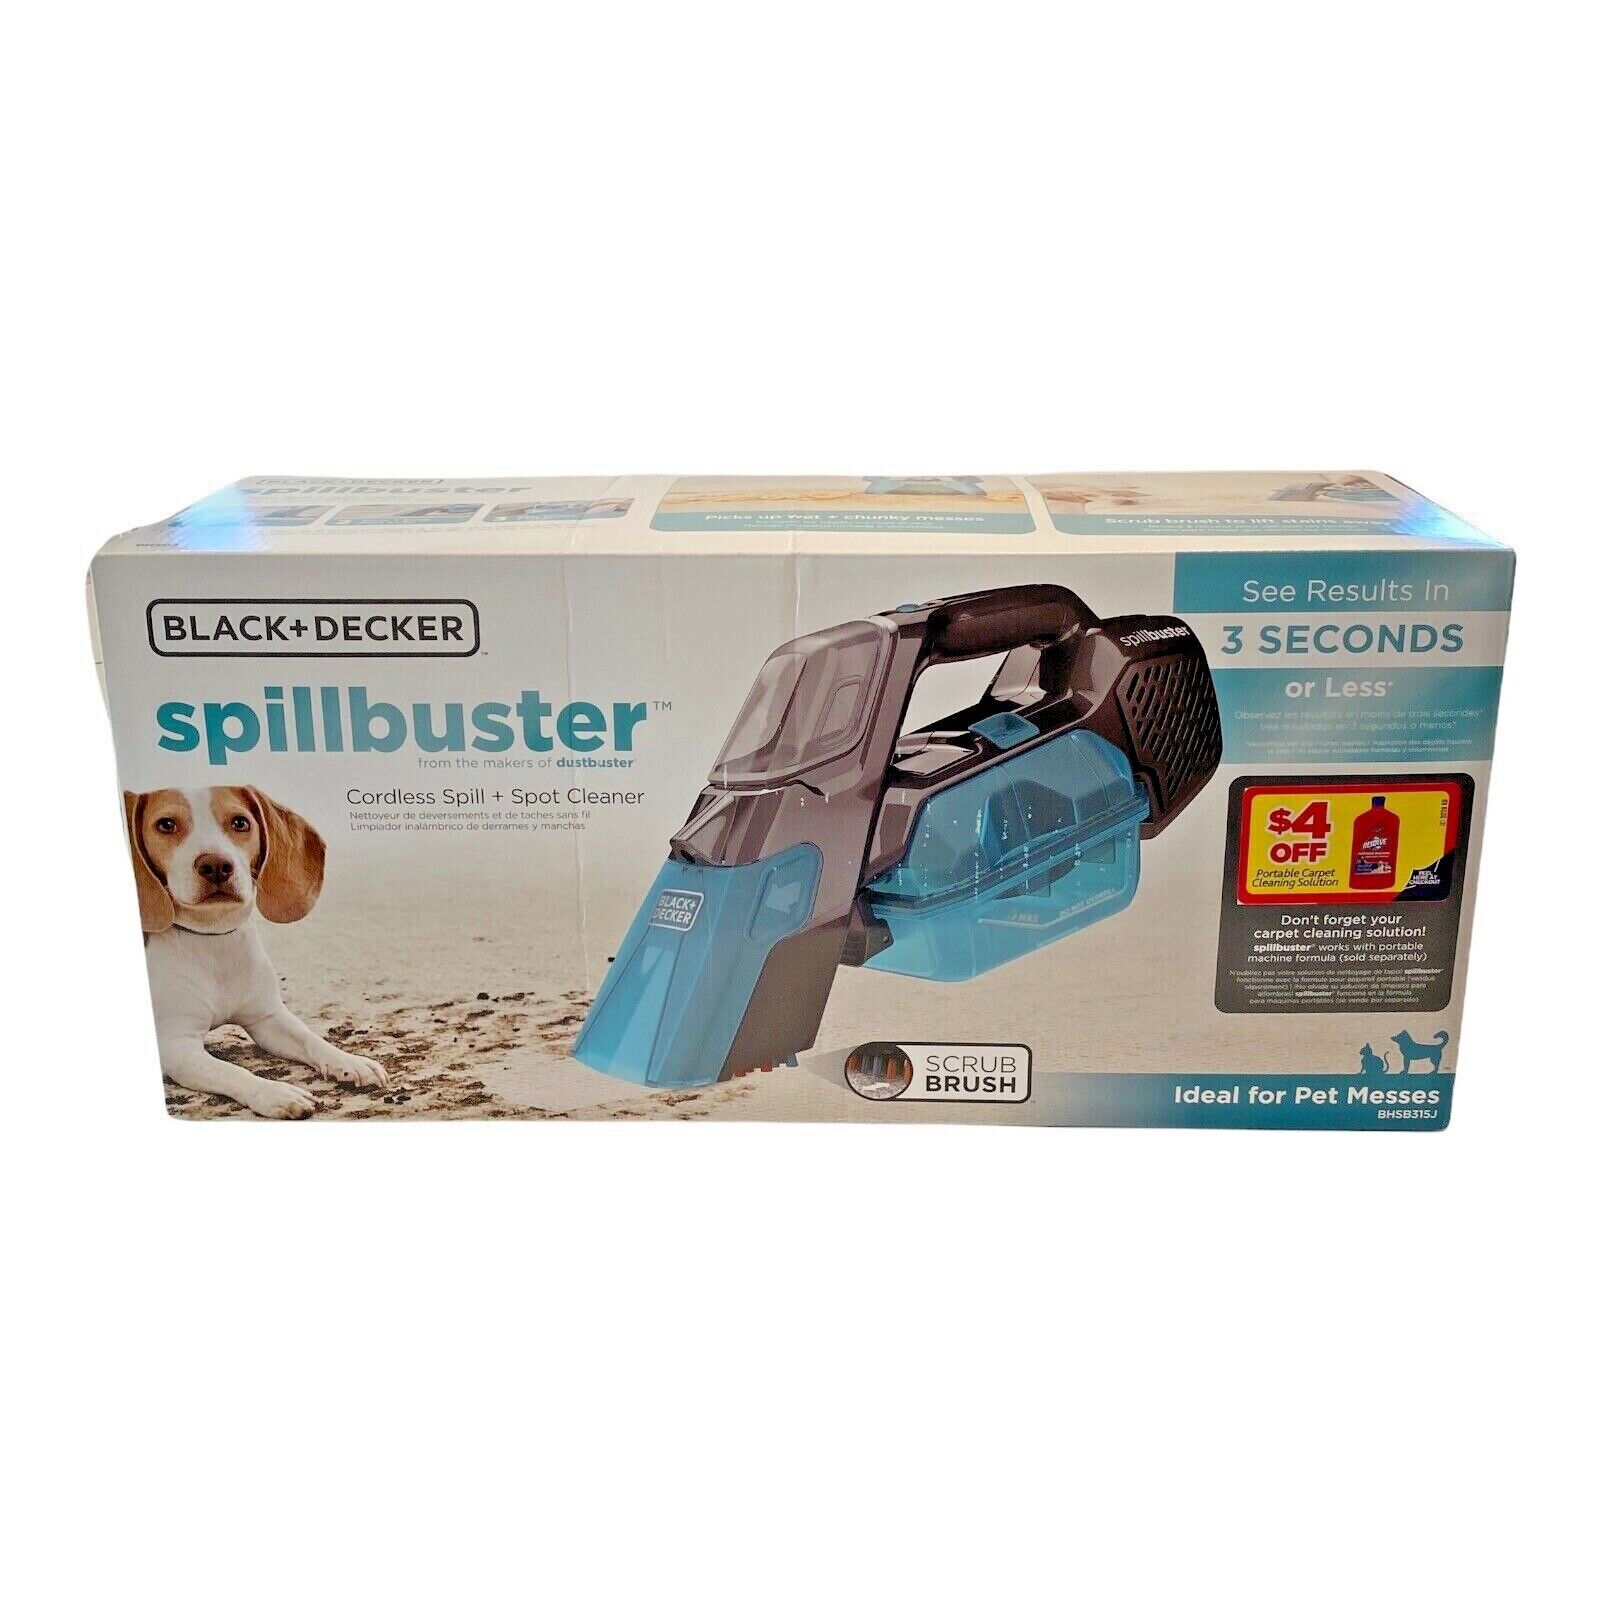 BLACK+DECKER Spillbuster Cordless Spill + Spot 1-Speed Carpet Cleaner &  Dustbuster 10.8-Volt Cordless Handheld Vacuum